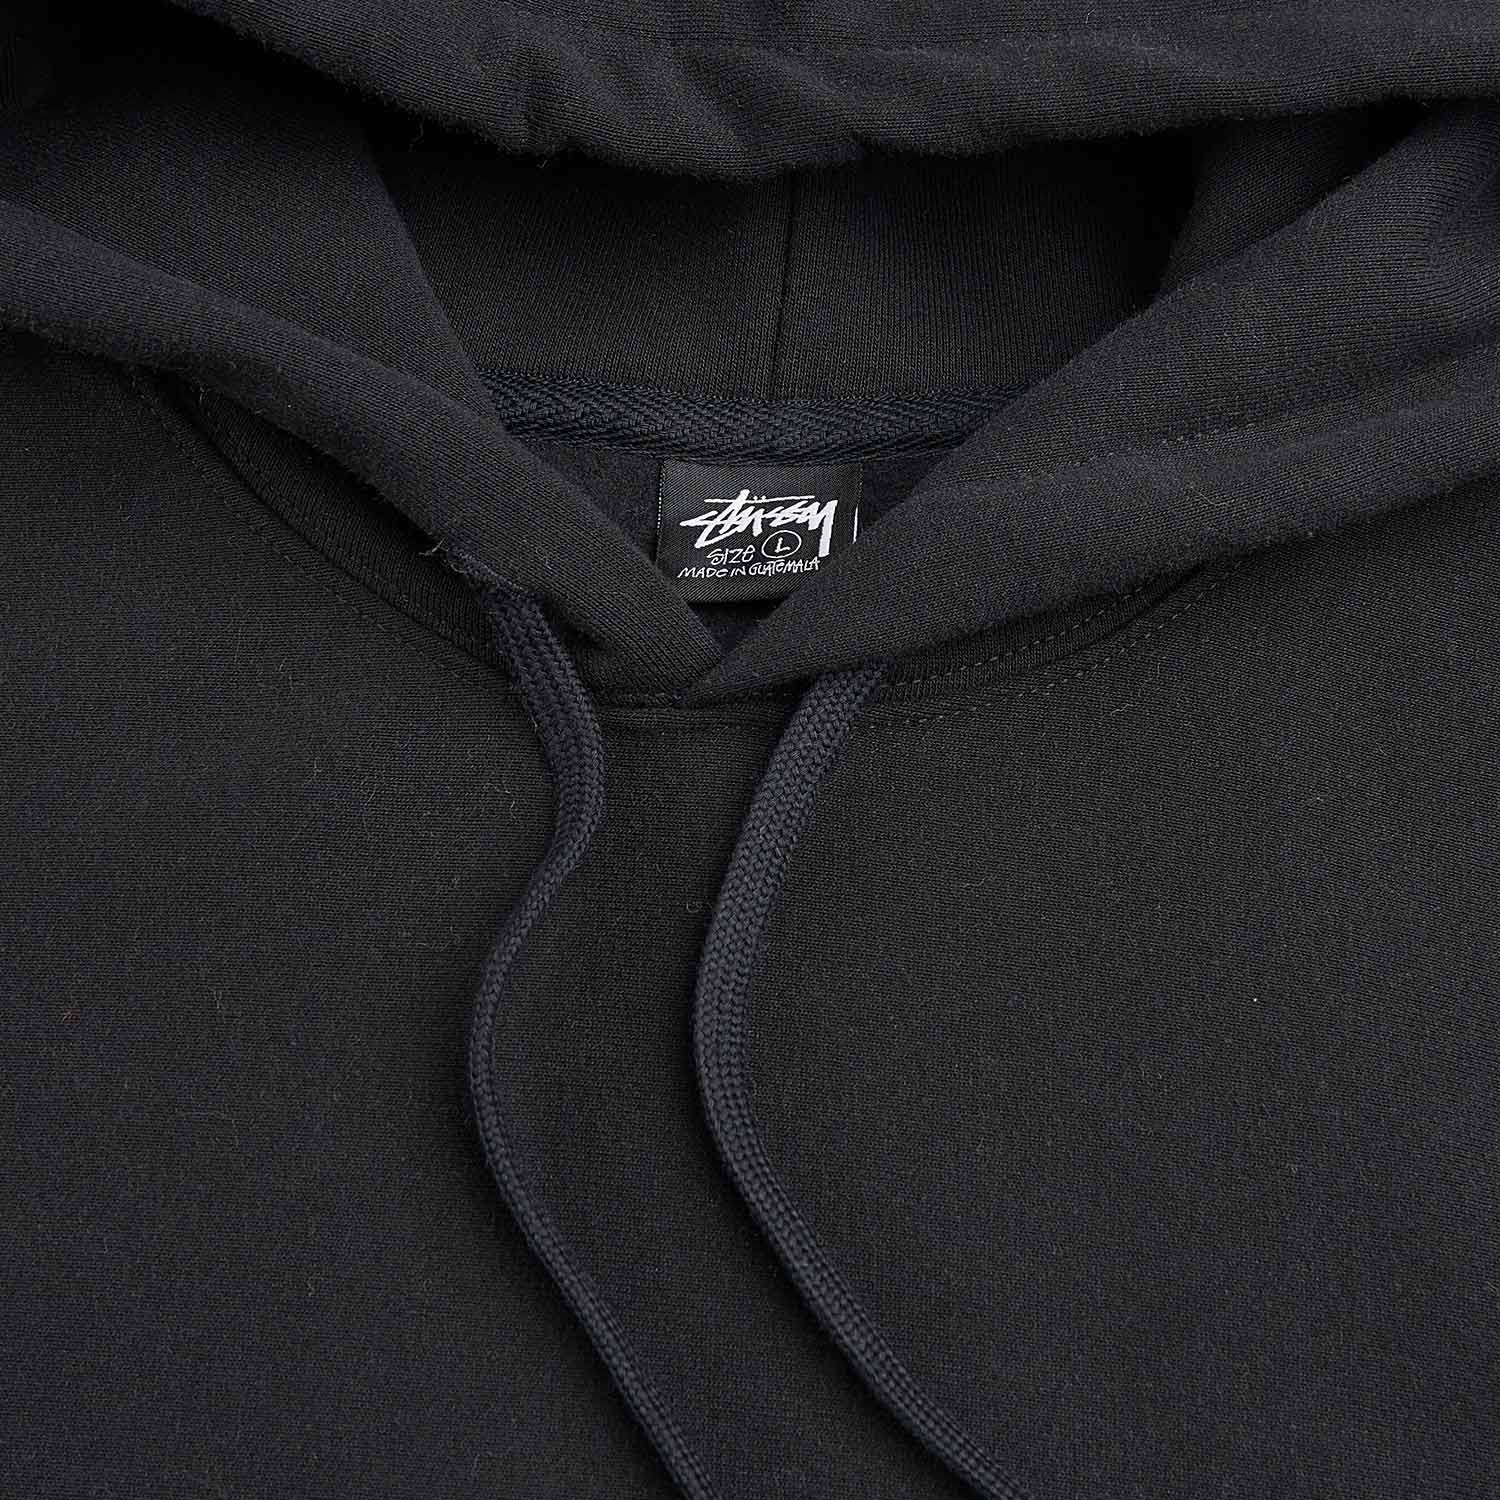 stüssy back hood applique hoodie (black) 118472-0001 - a.plus store